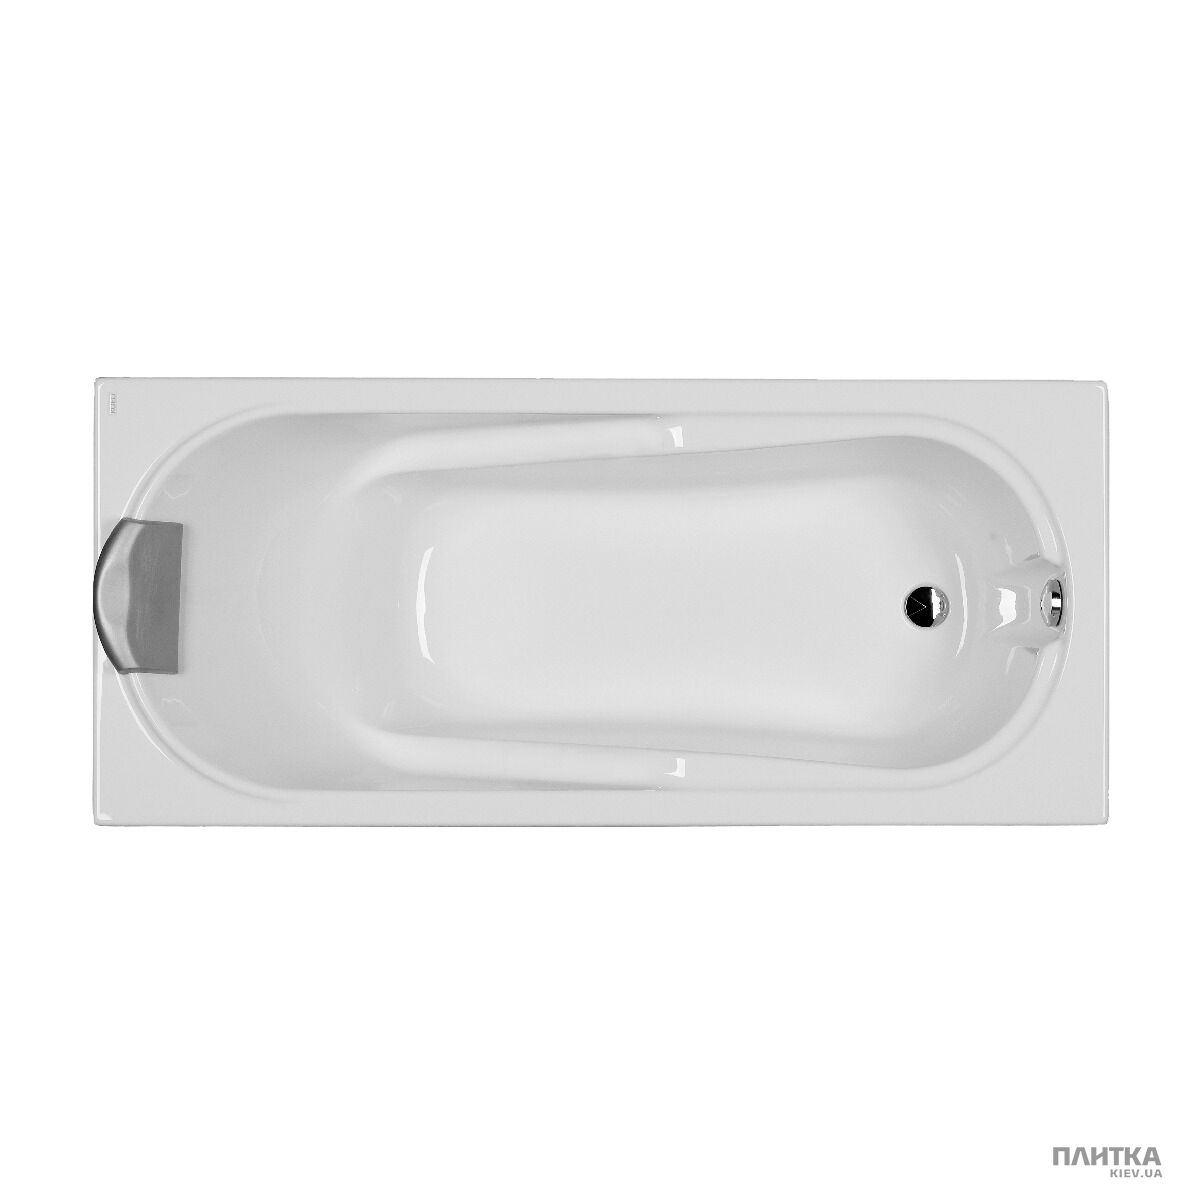 Акрилова ванна Kolo Comfort XWP306000G COMFORT 160 UA прямокутна ванна 160 x 75 см в комплекті з сифоном Geberit 150.520.21.1. білий